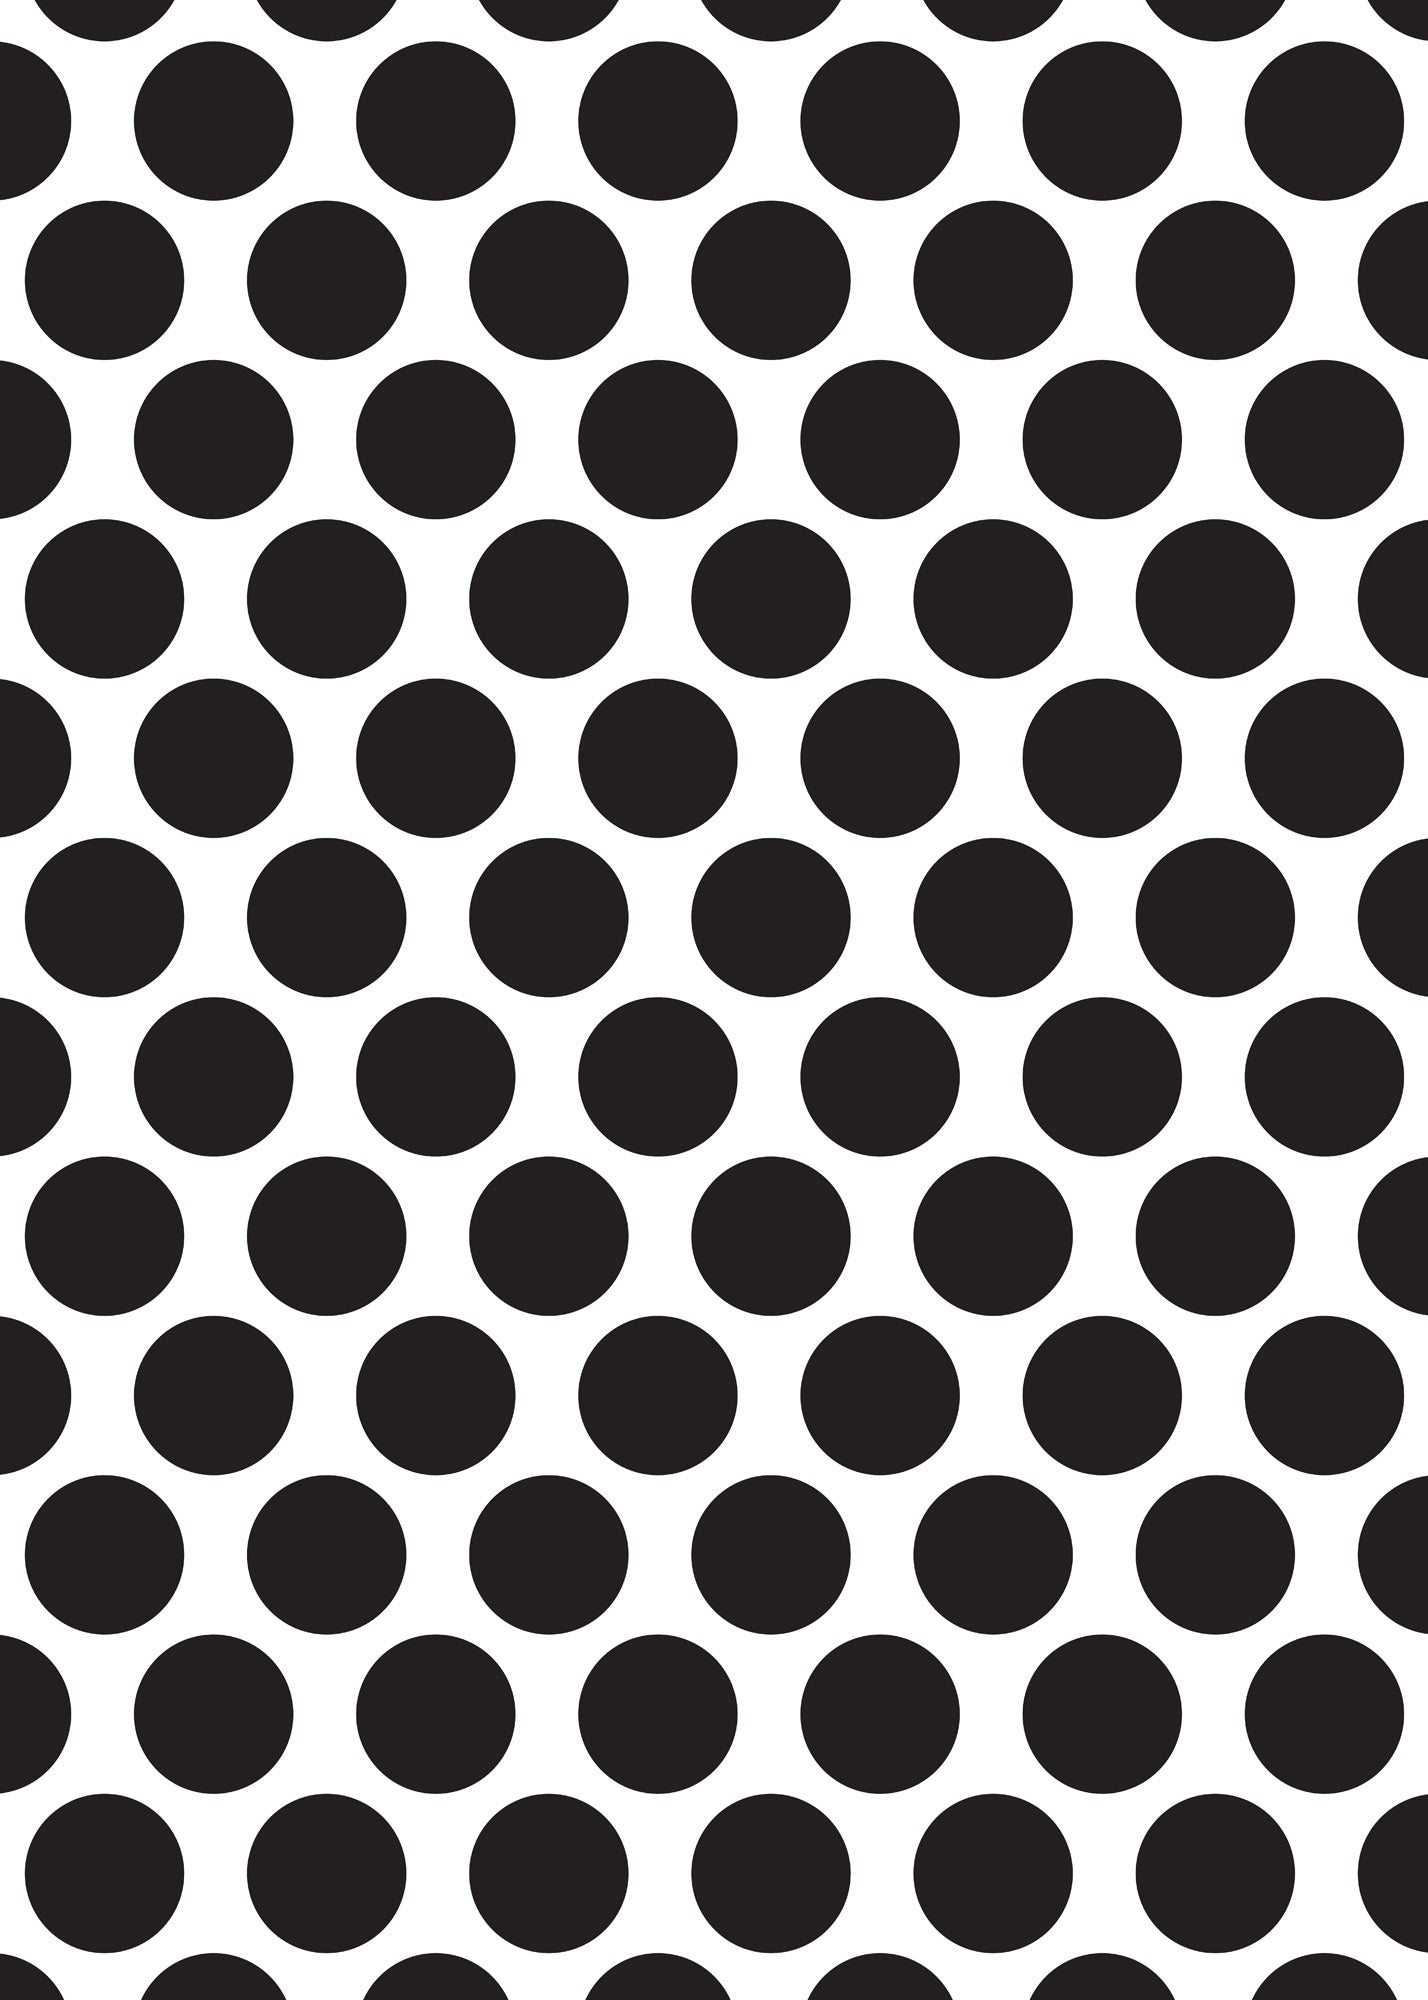 Black Polka Dots on White Background Backdrop